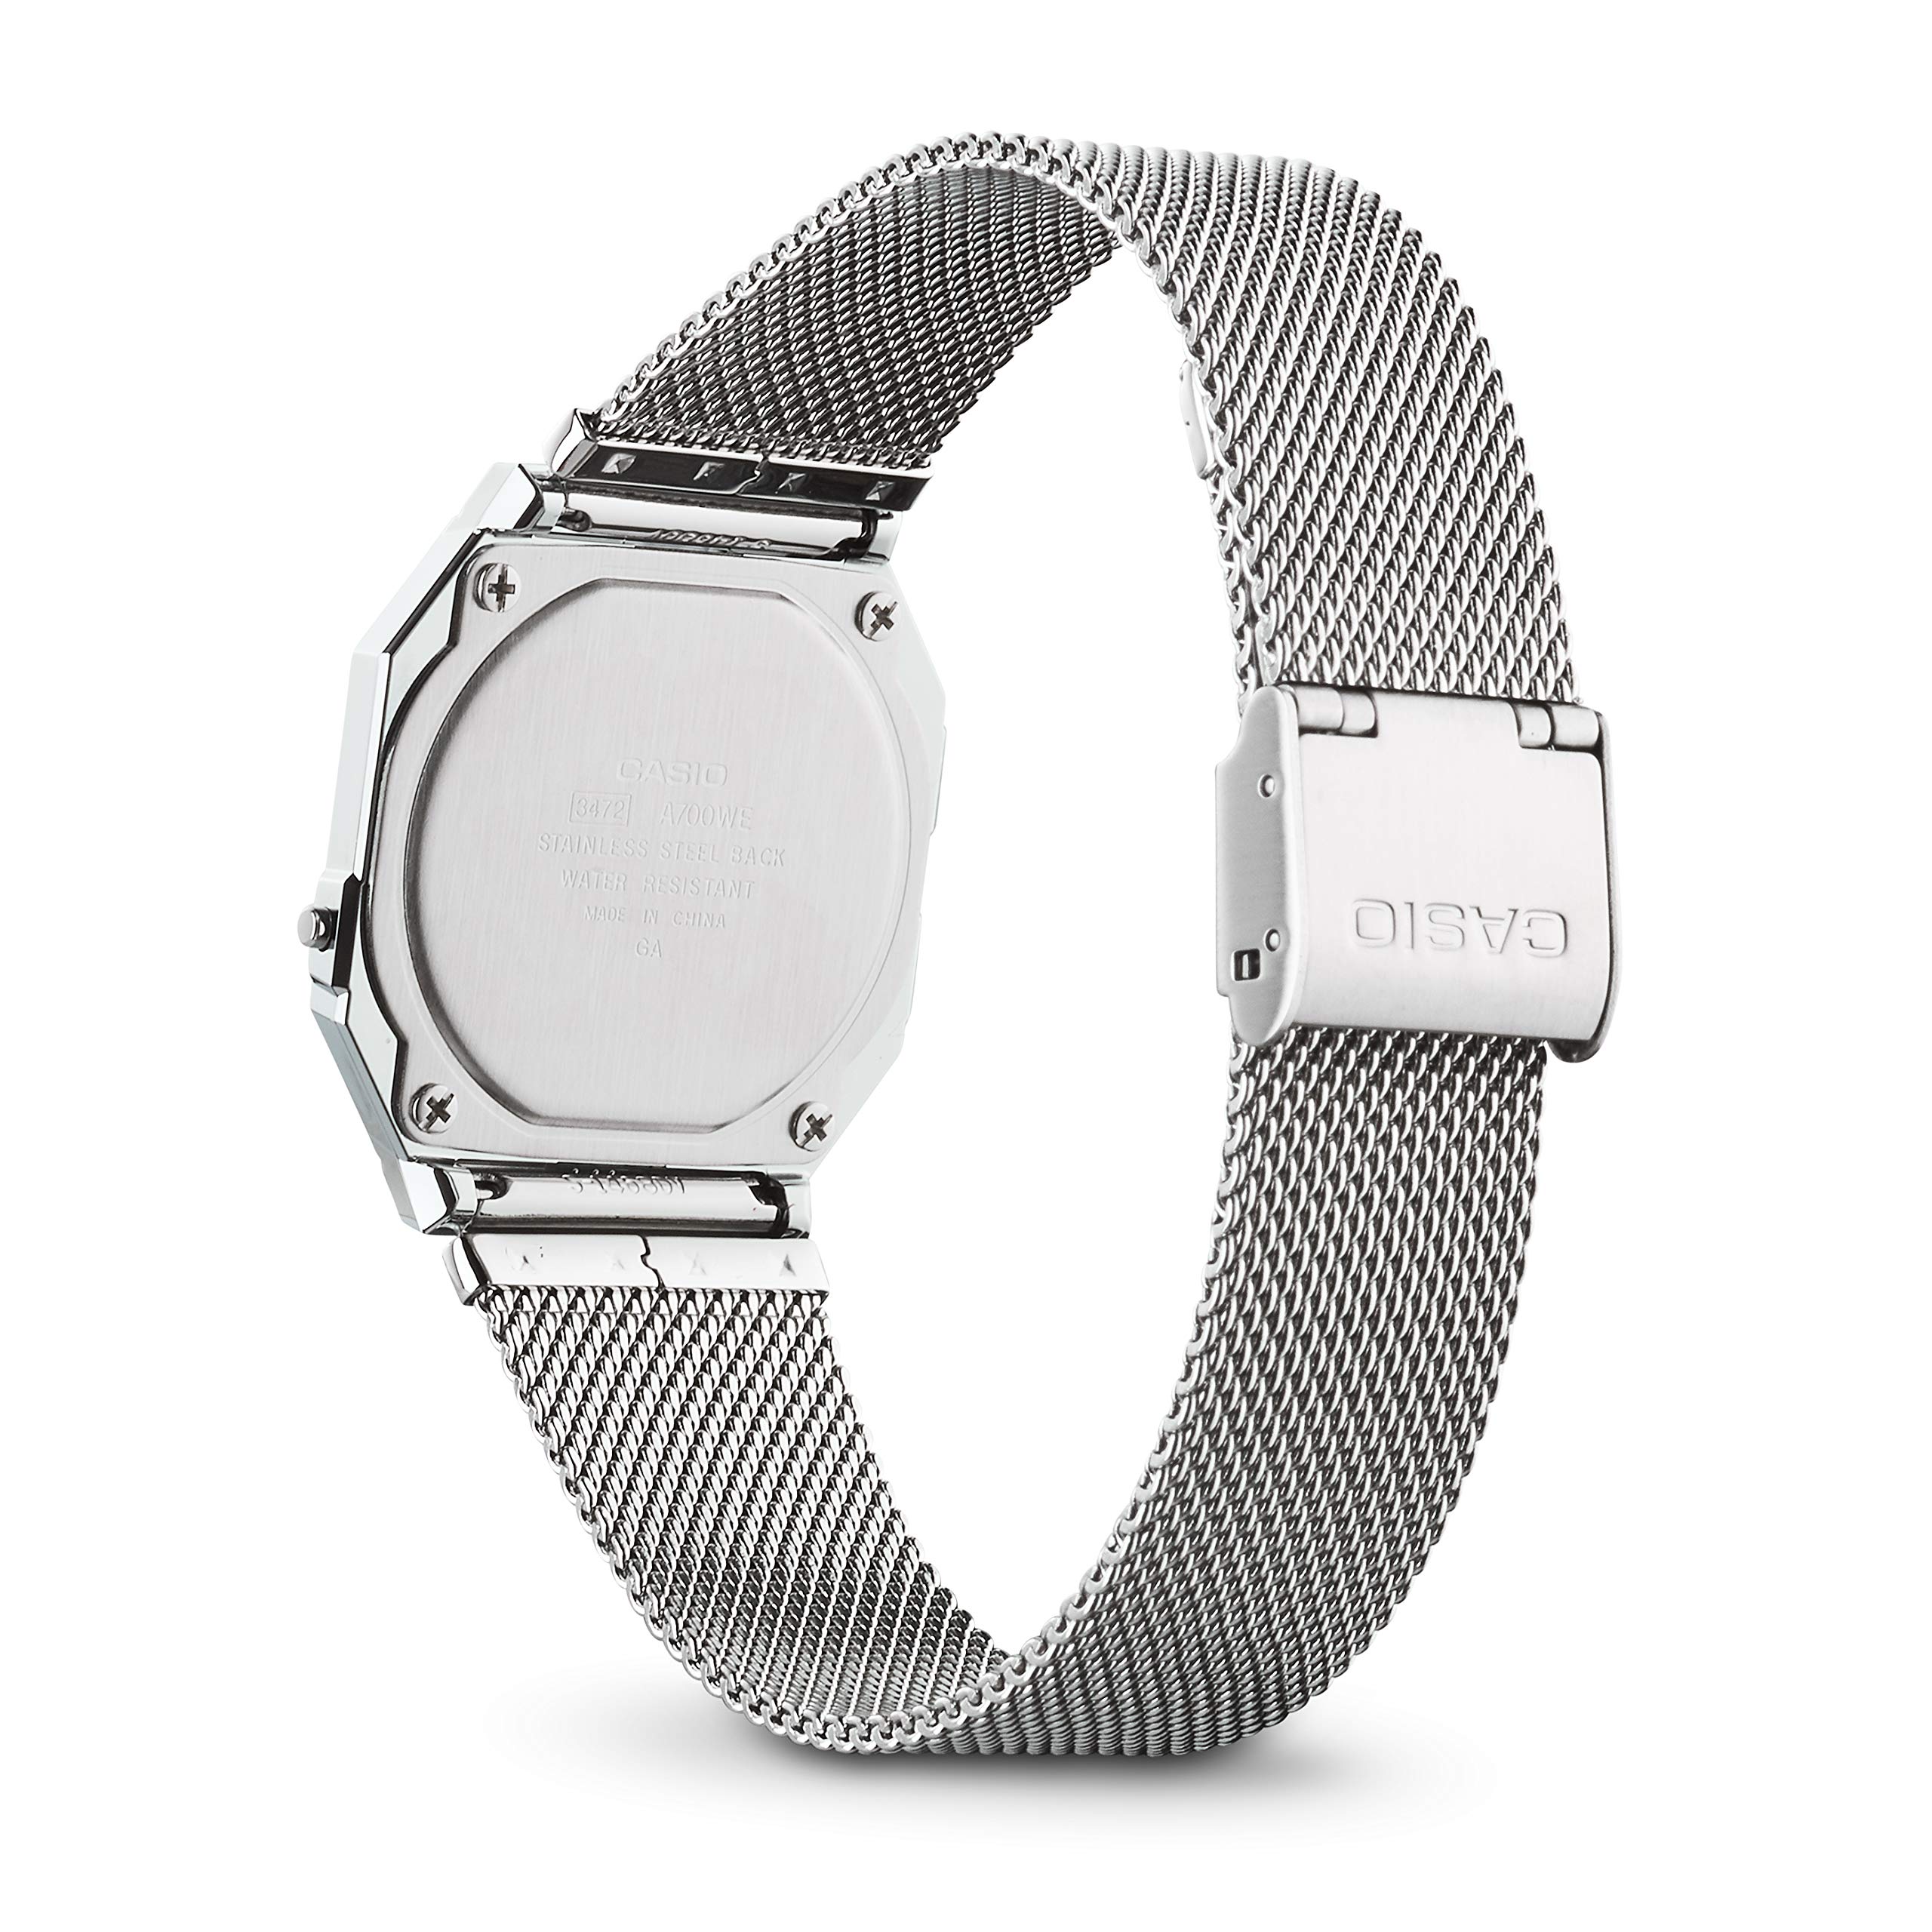 Casio Damen Digital Quarz Uhr mit Edelstahl Armband A700WEM-7AEF